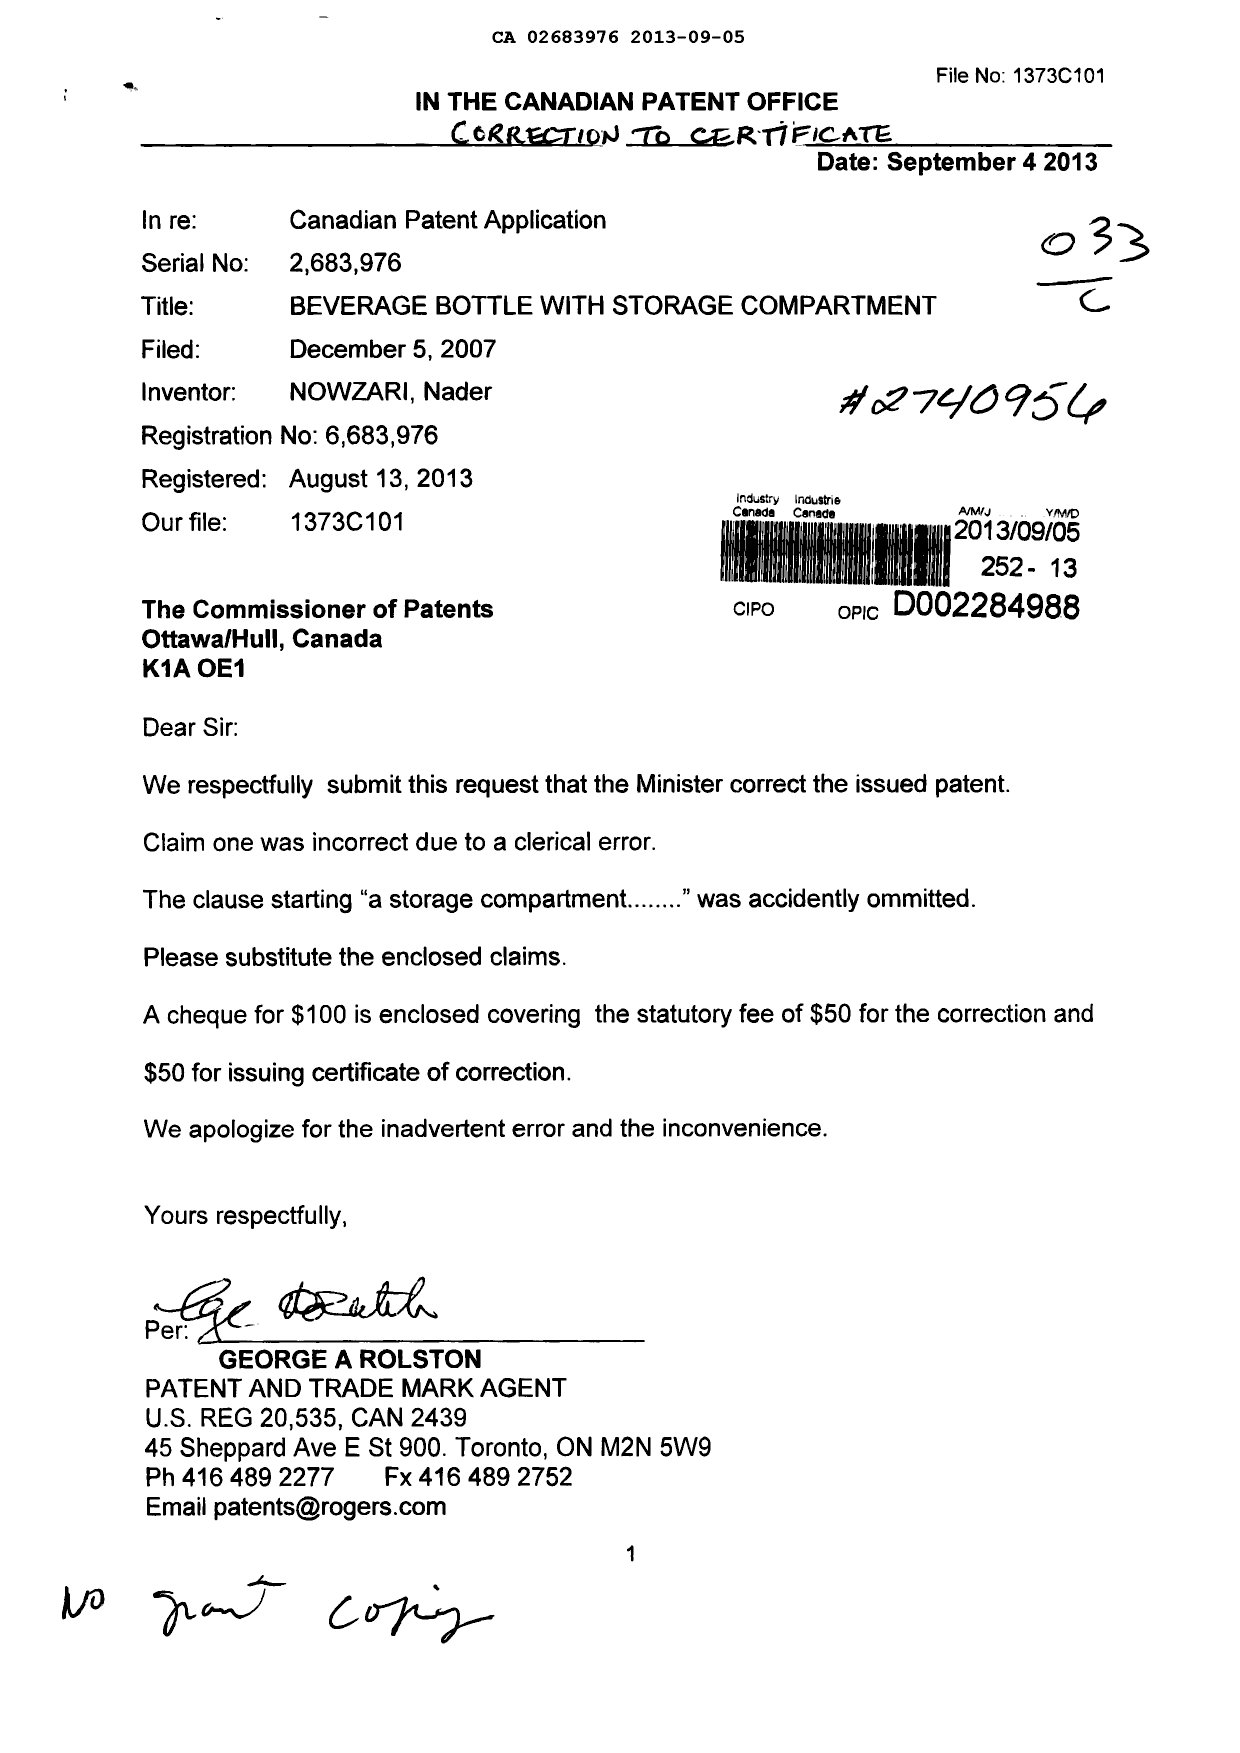 Canadian Patent Document 2683976. Correspondence 20130905. Image 1 of 2